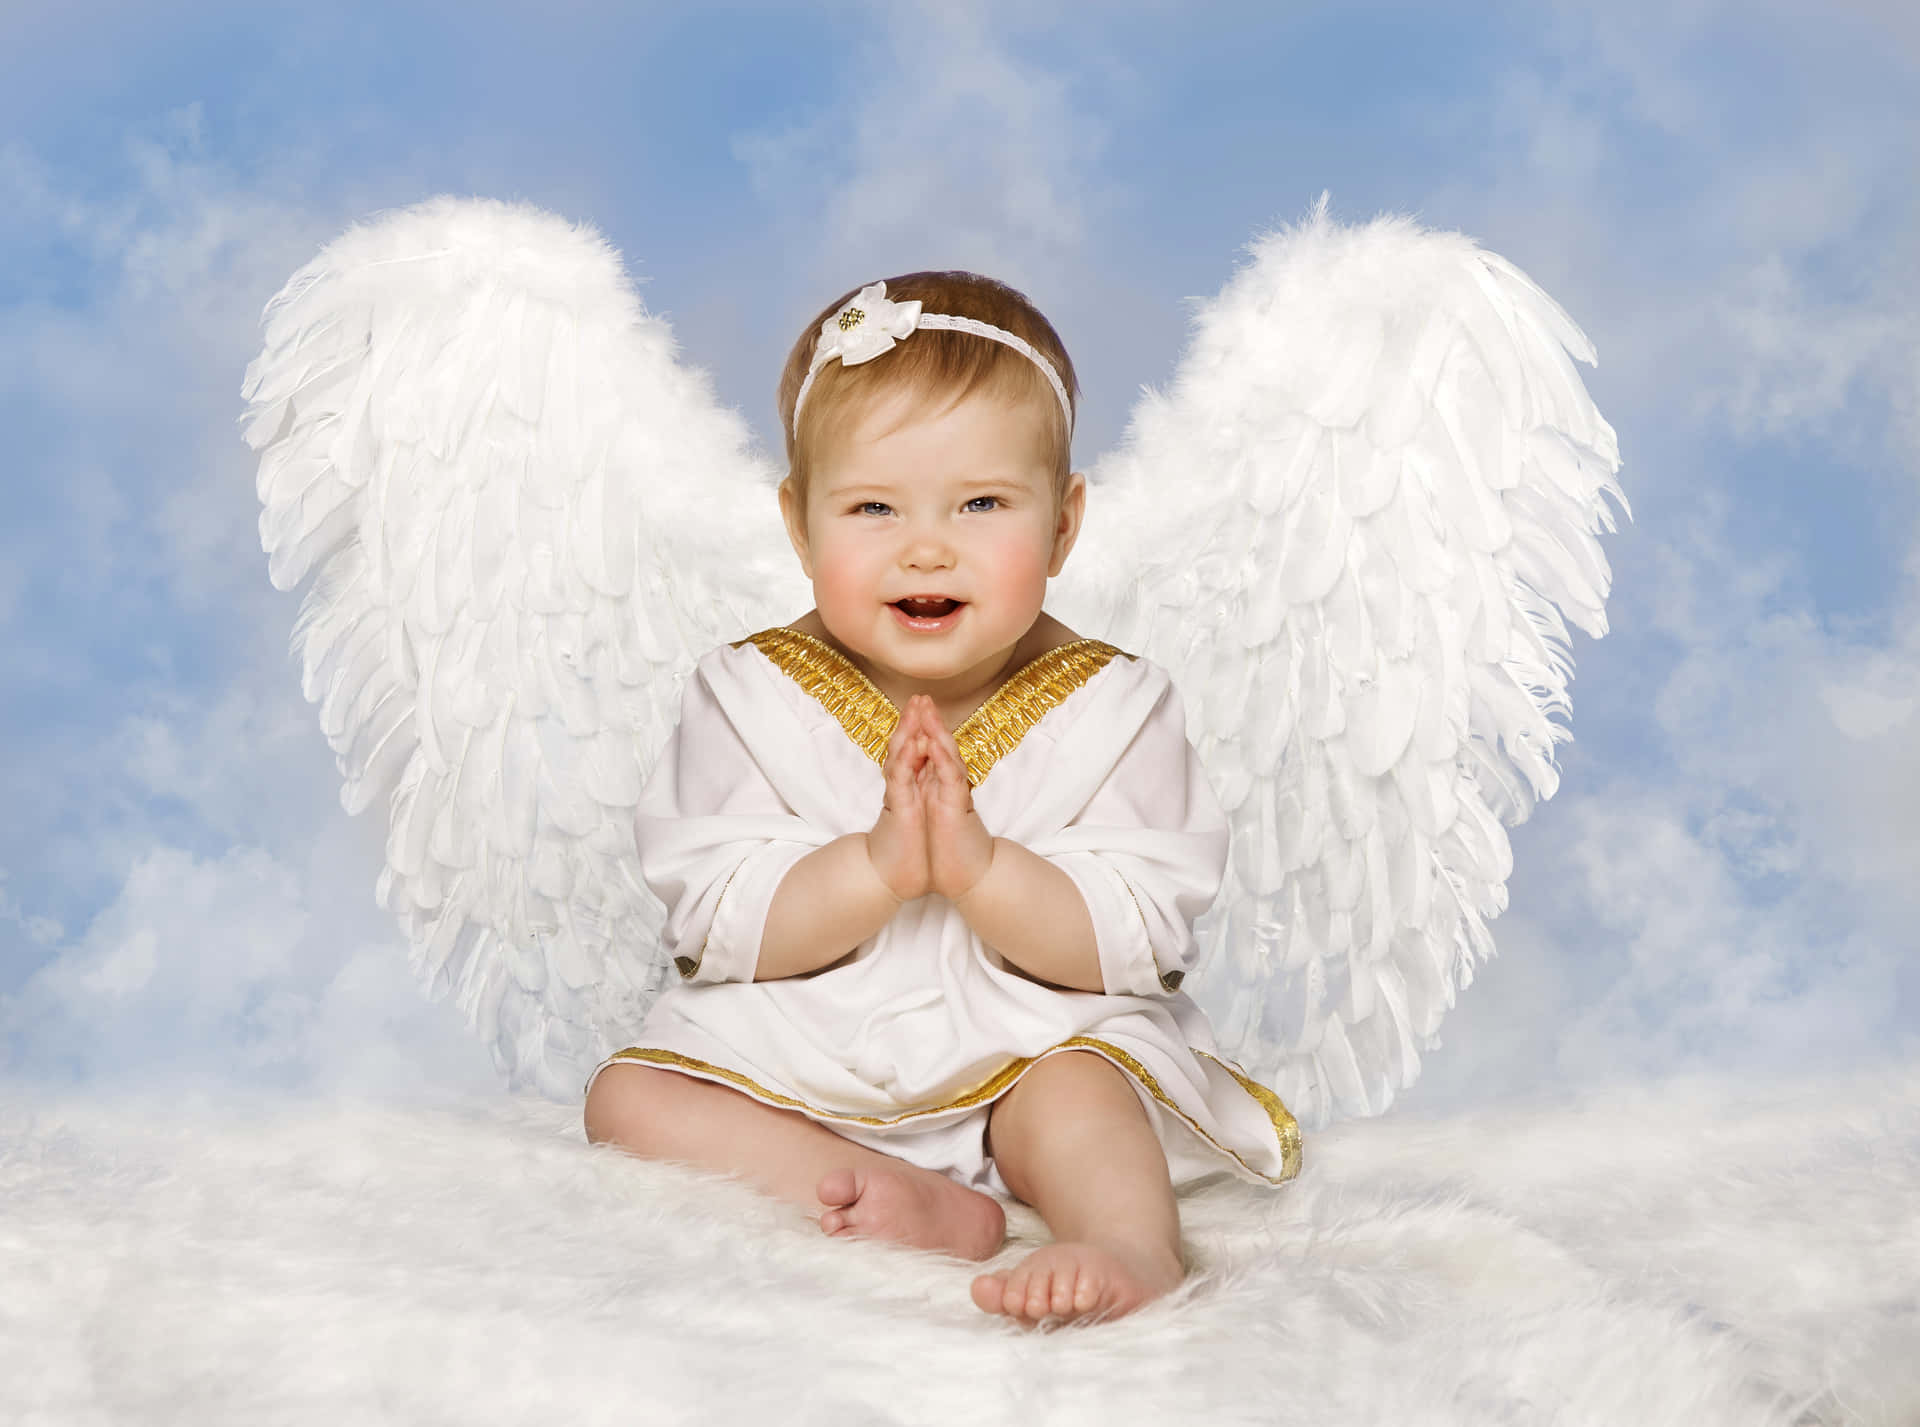 Baby Guardian Angels Smiling Wallpaper